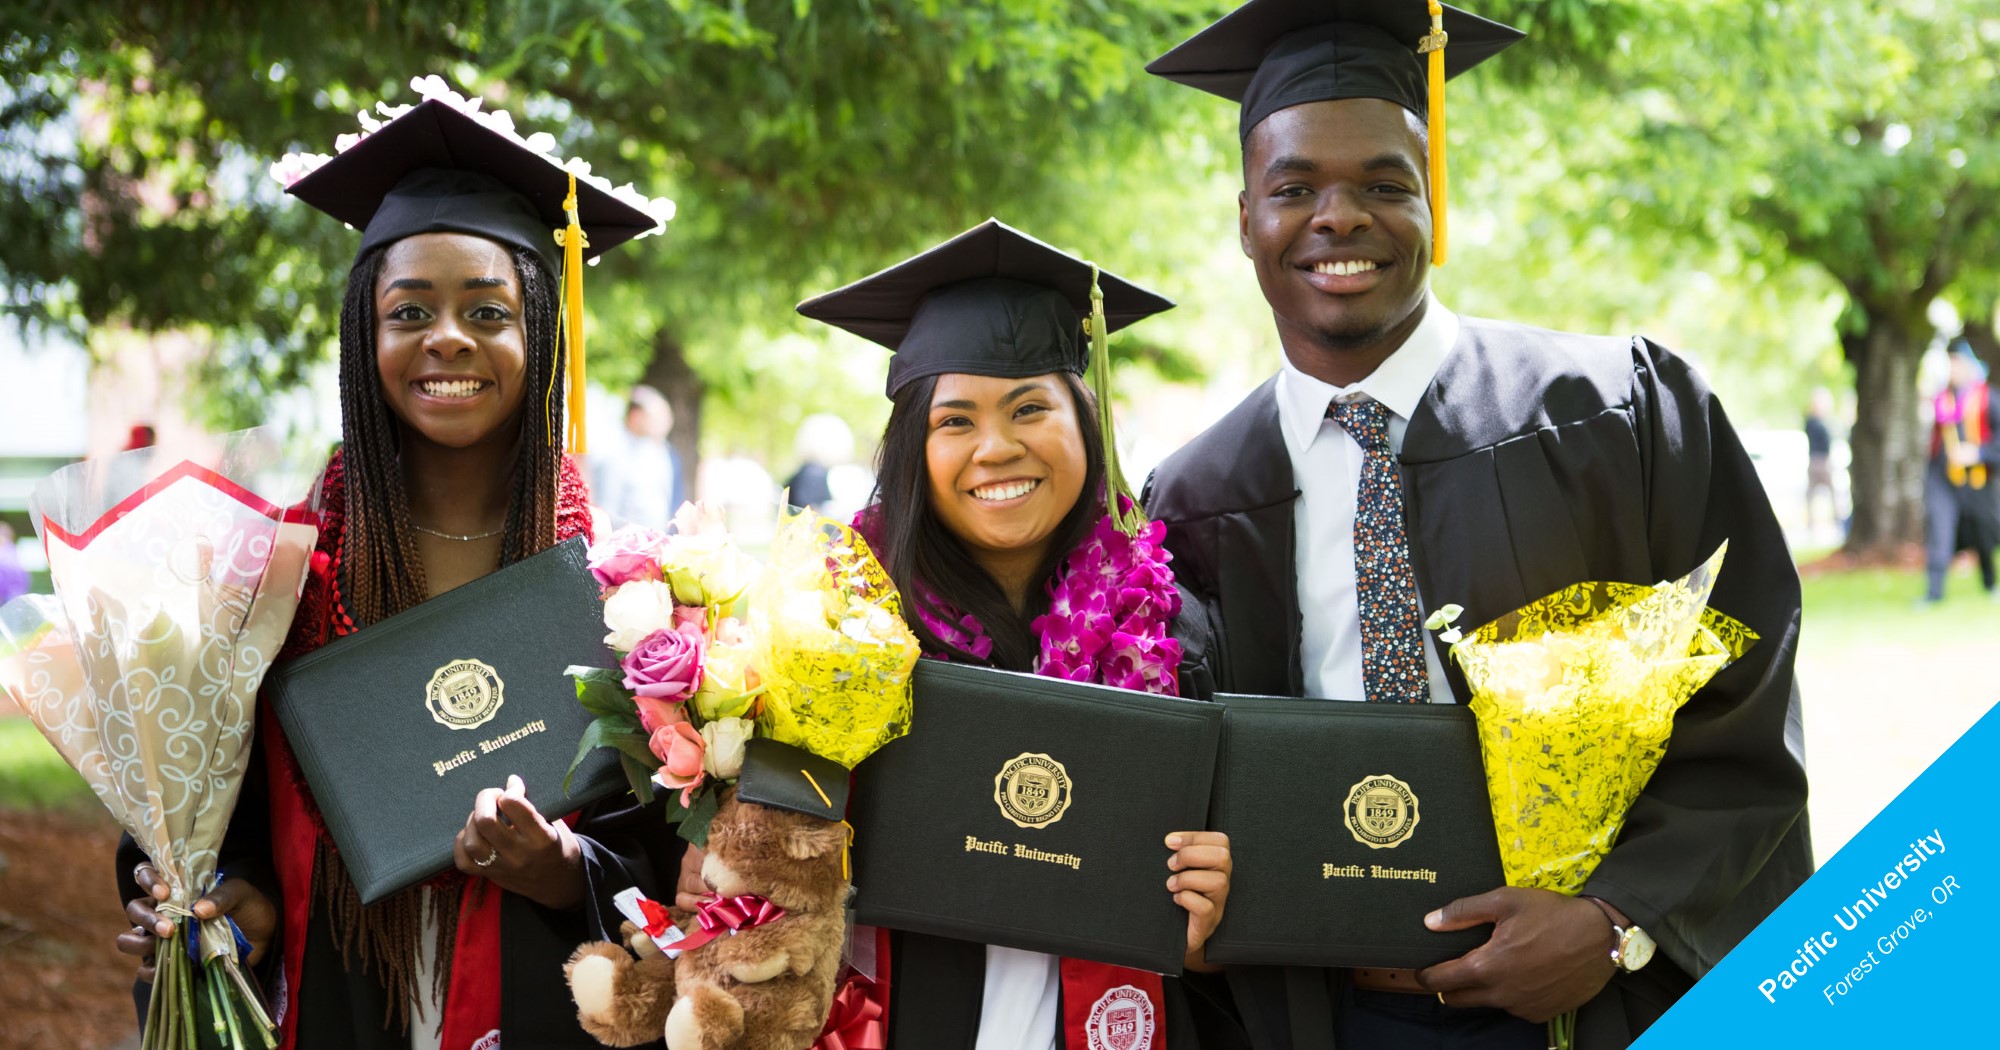 Smiling graduates of Pacific University